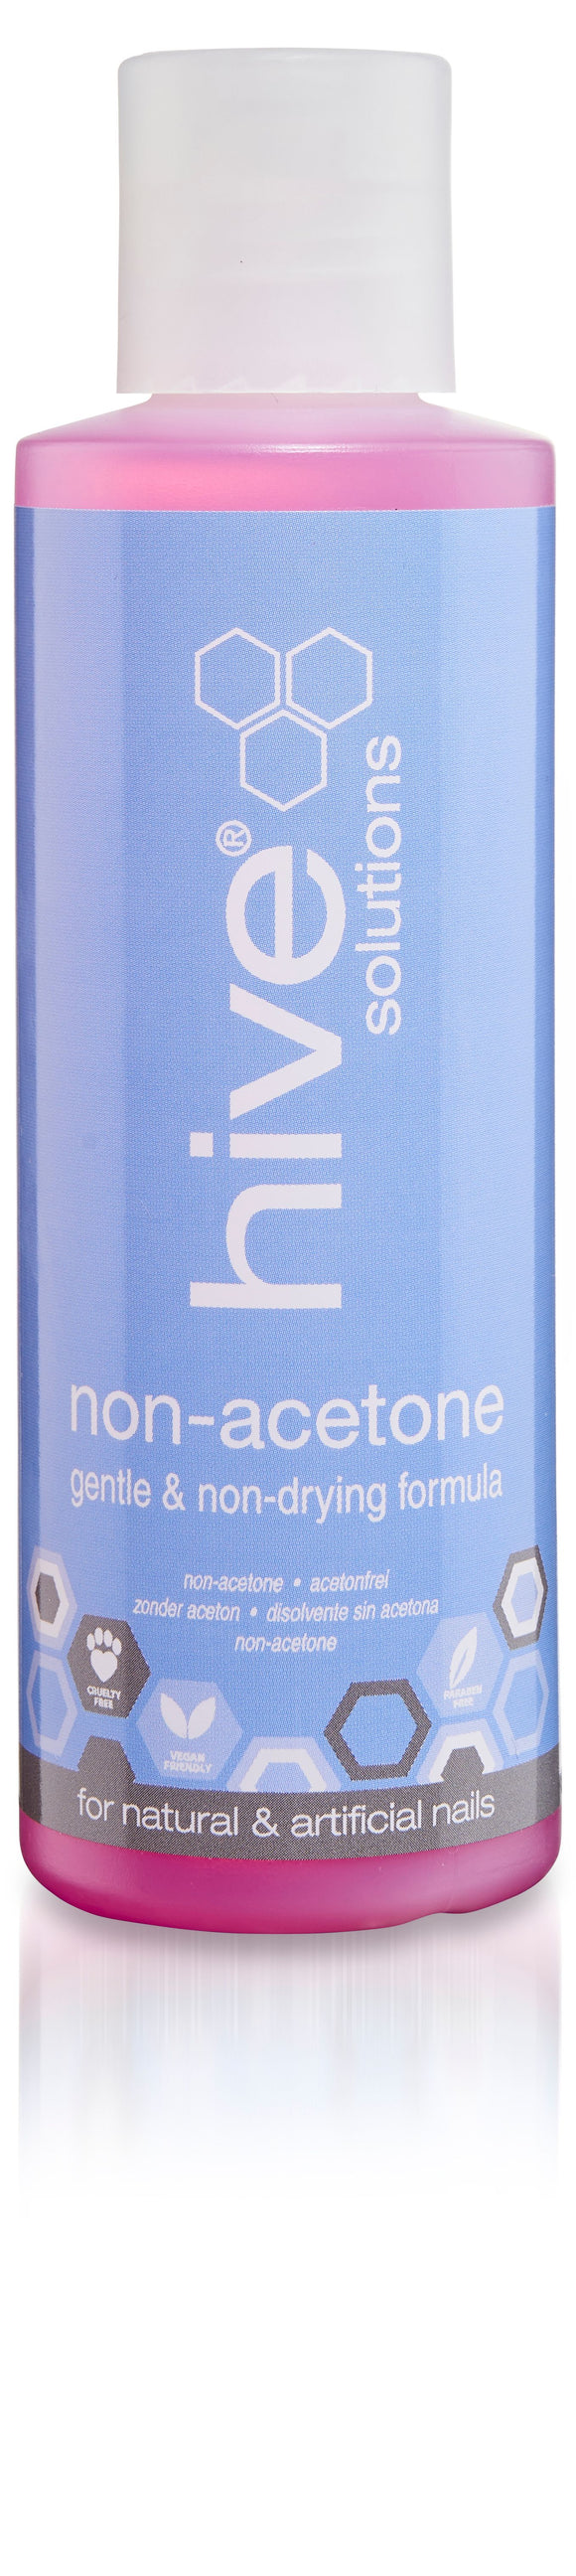 Hive - Solutions - Non-Acetone